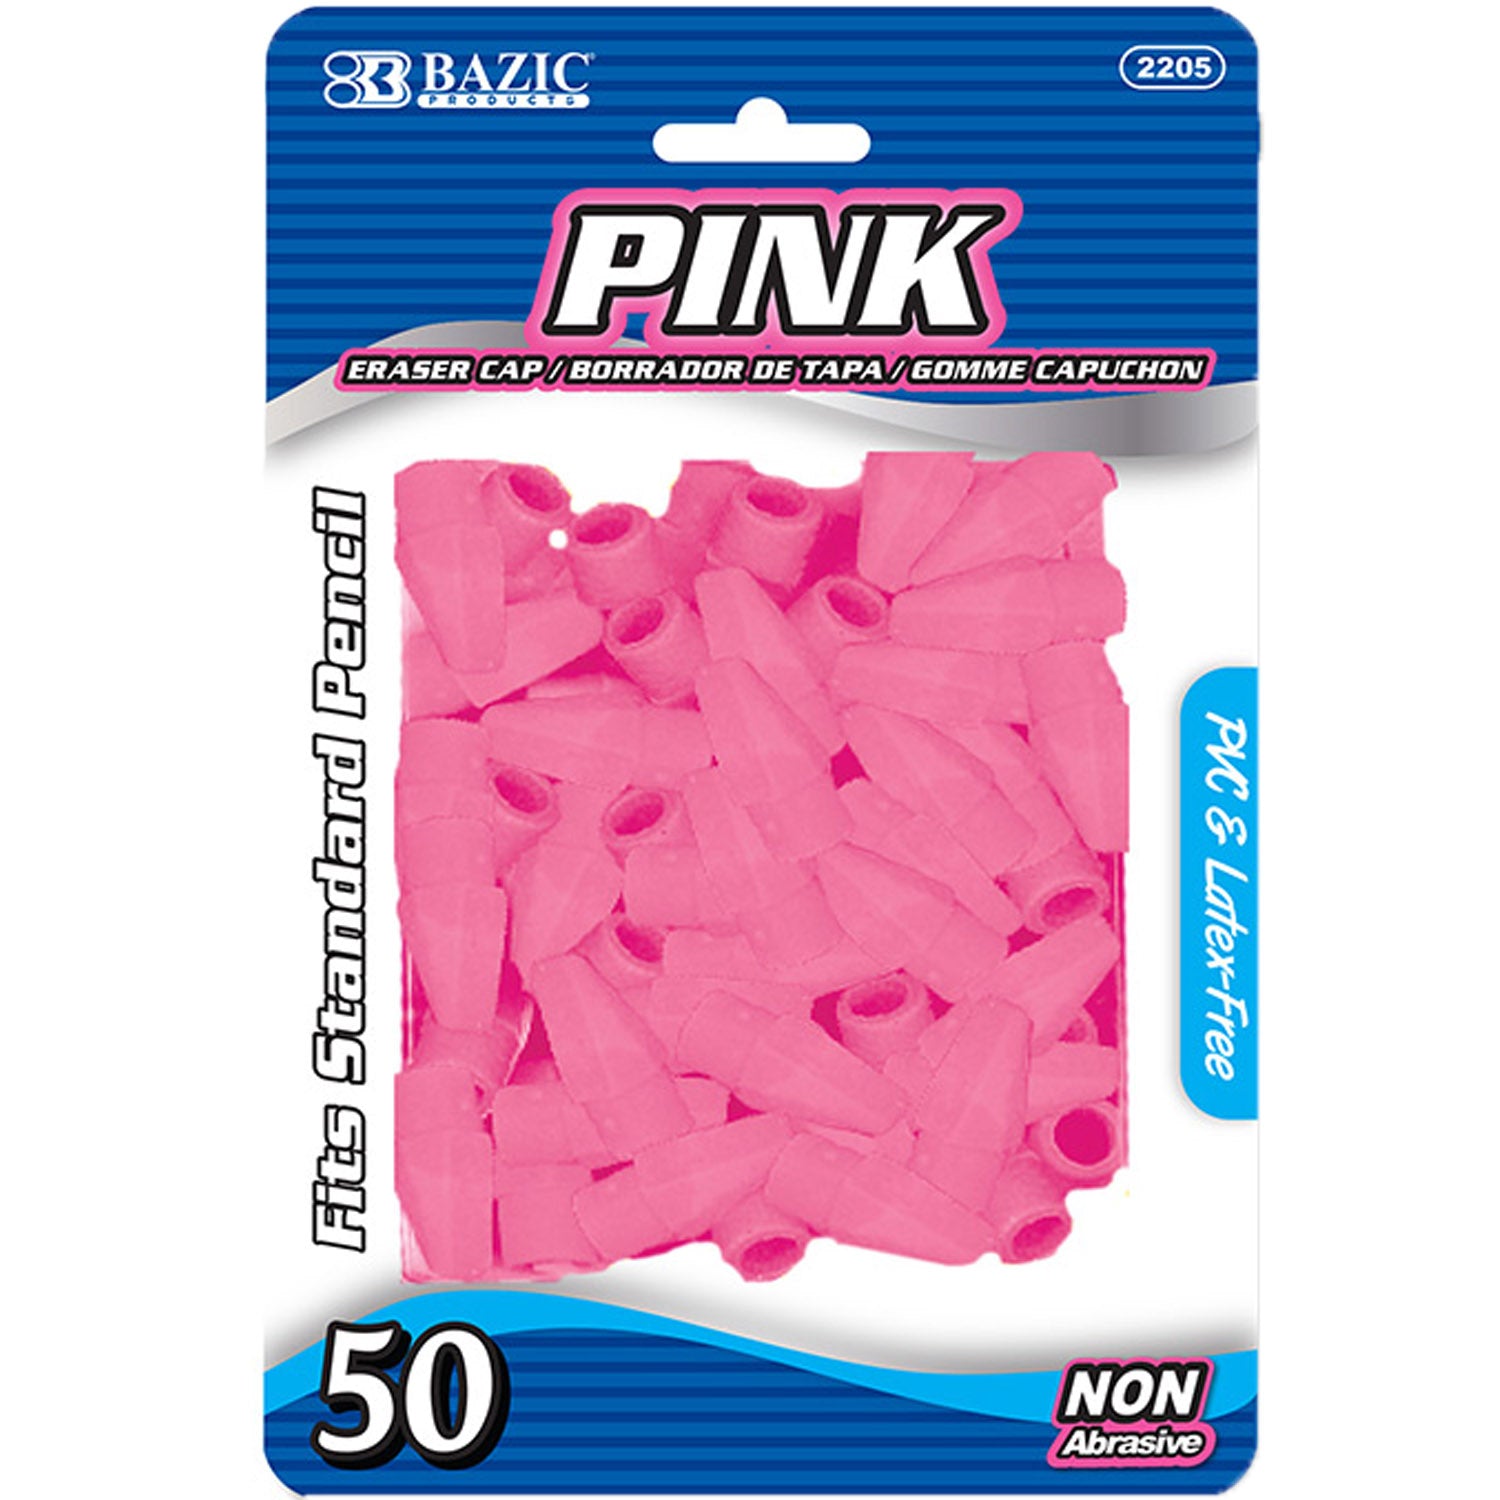 Pink Eraser Top, Pencil Top Erasers, Arrowhead Caps Tops Eraser (50/Pack)